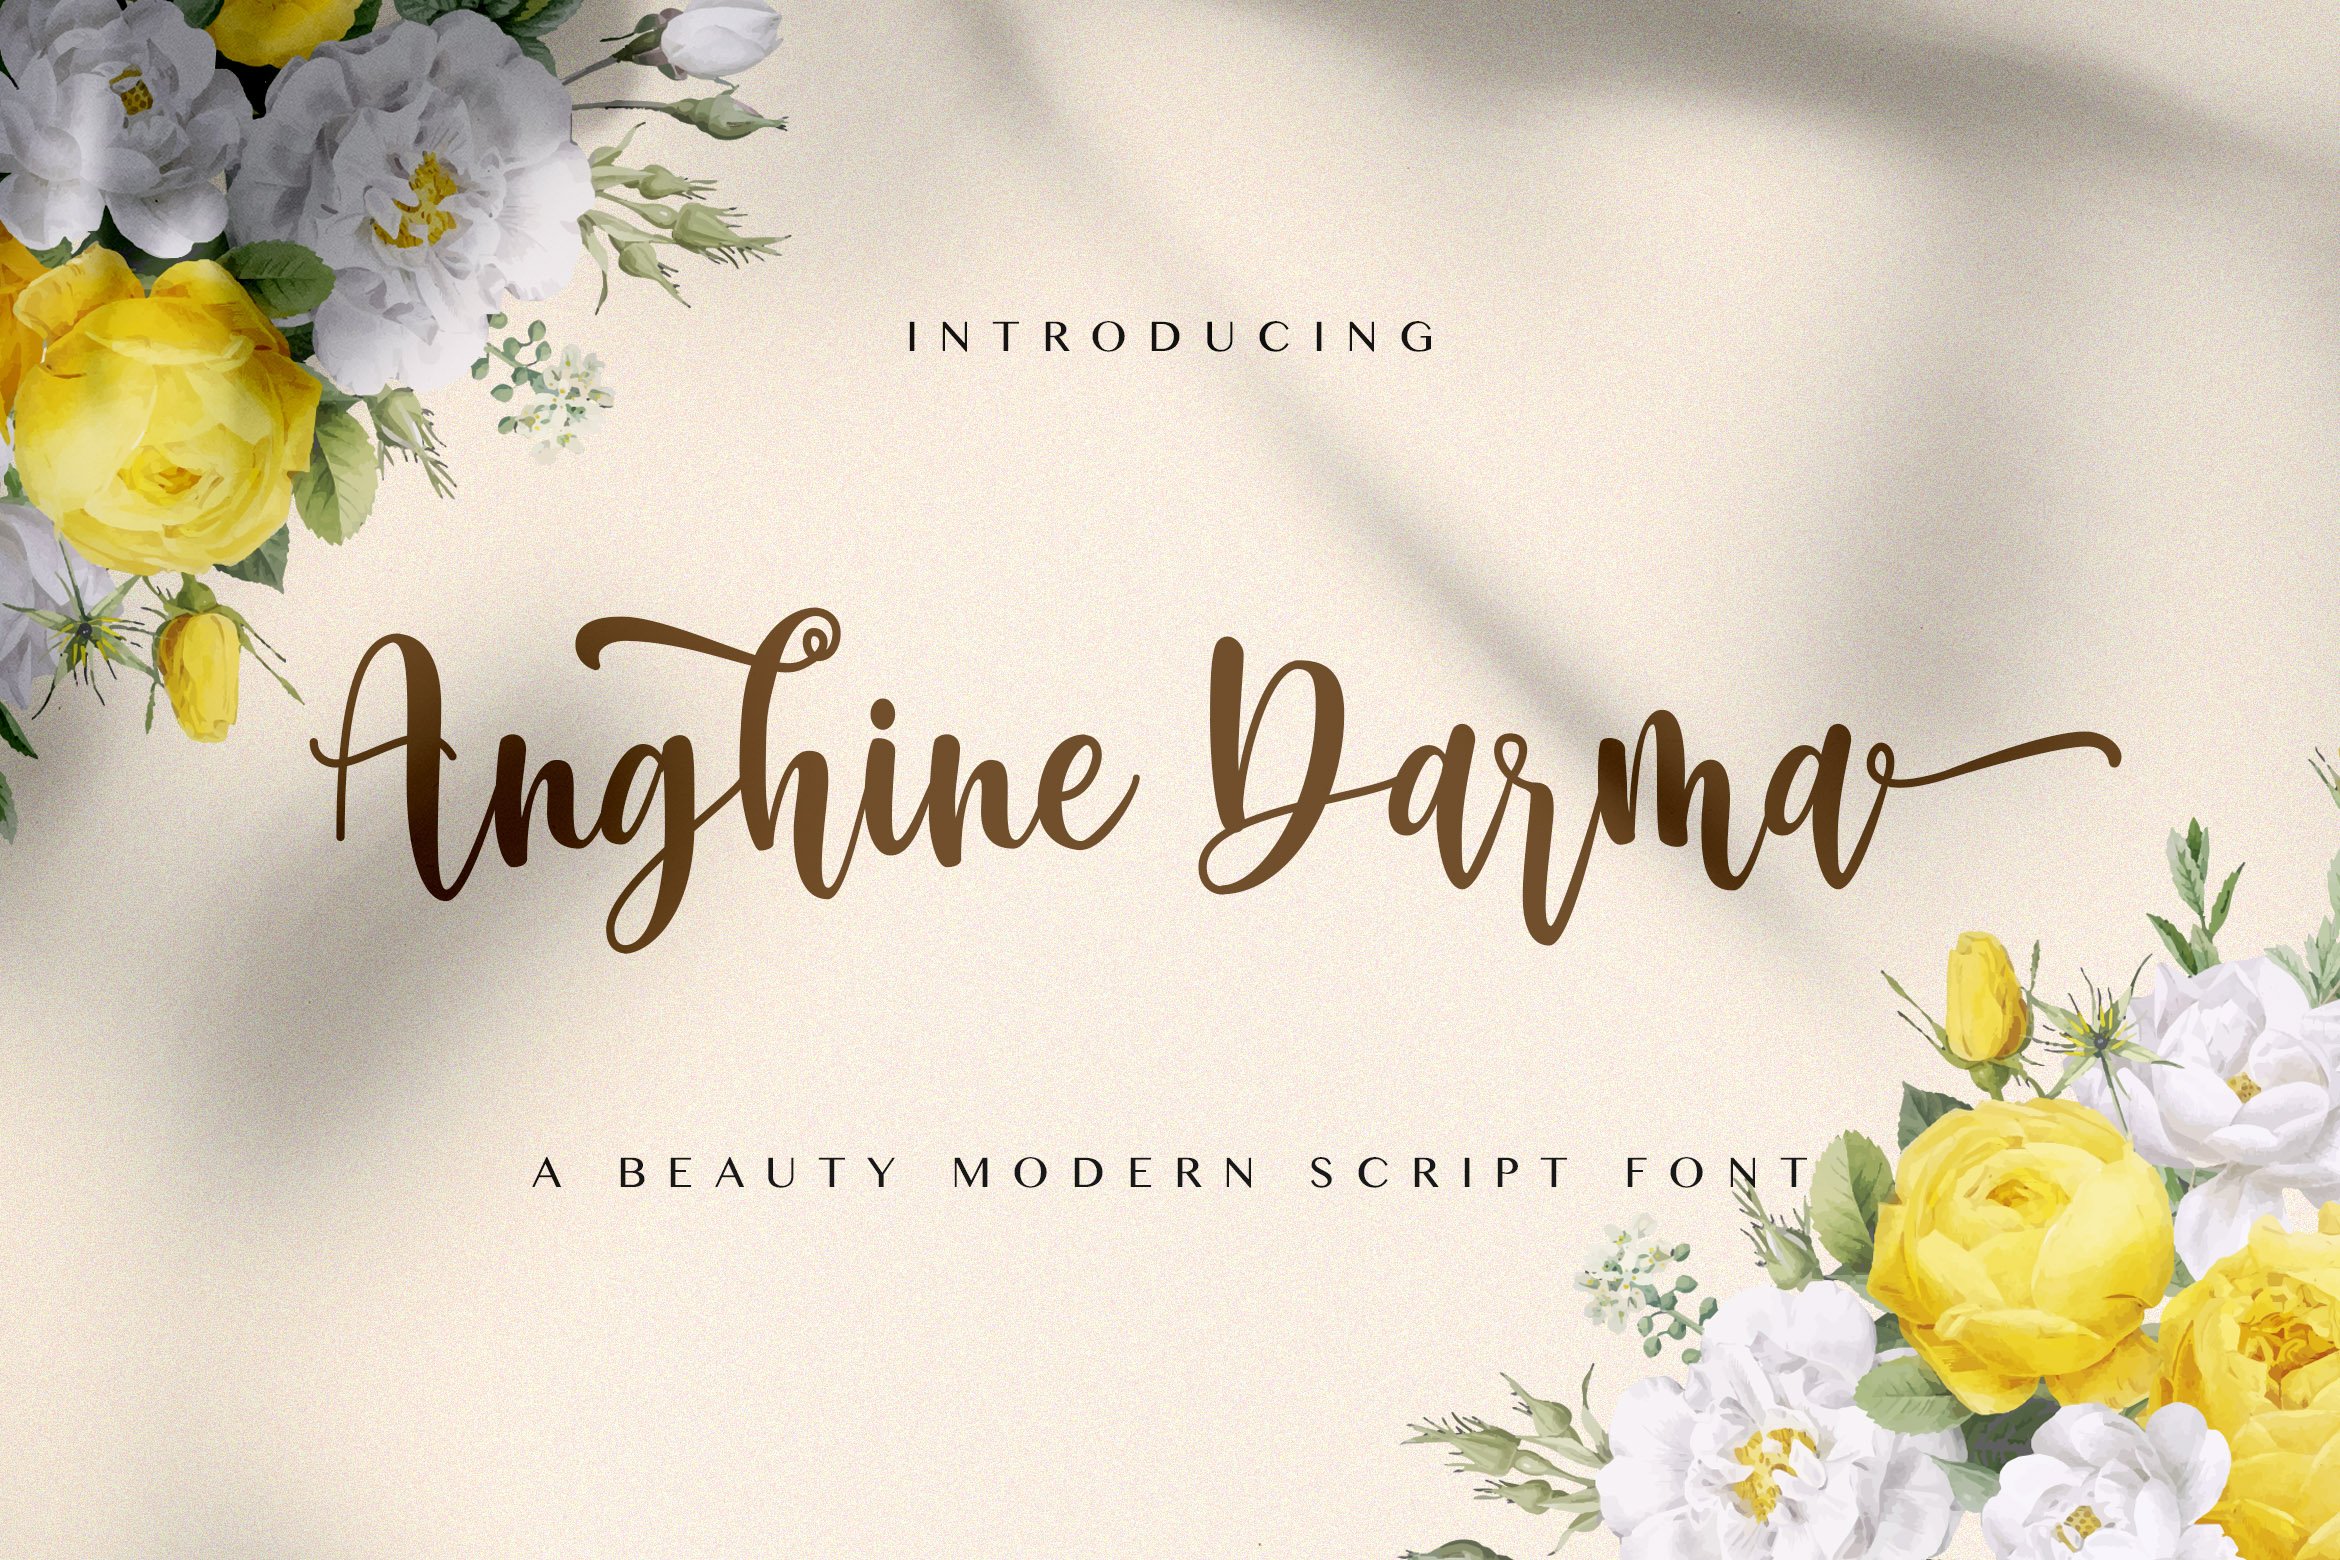 Anghine Darma - Modern Script Font cover image.